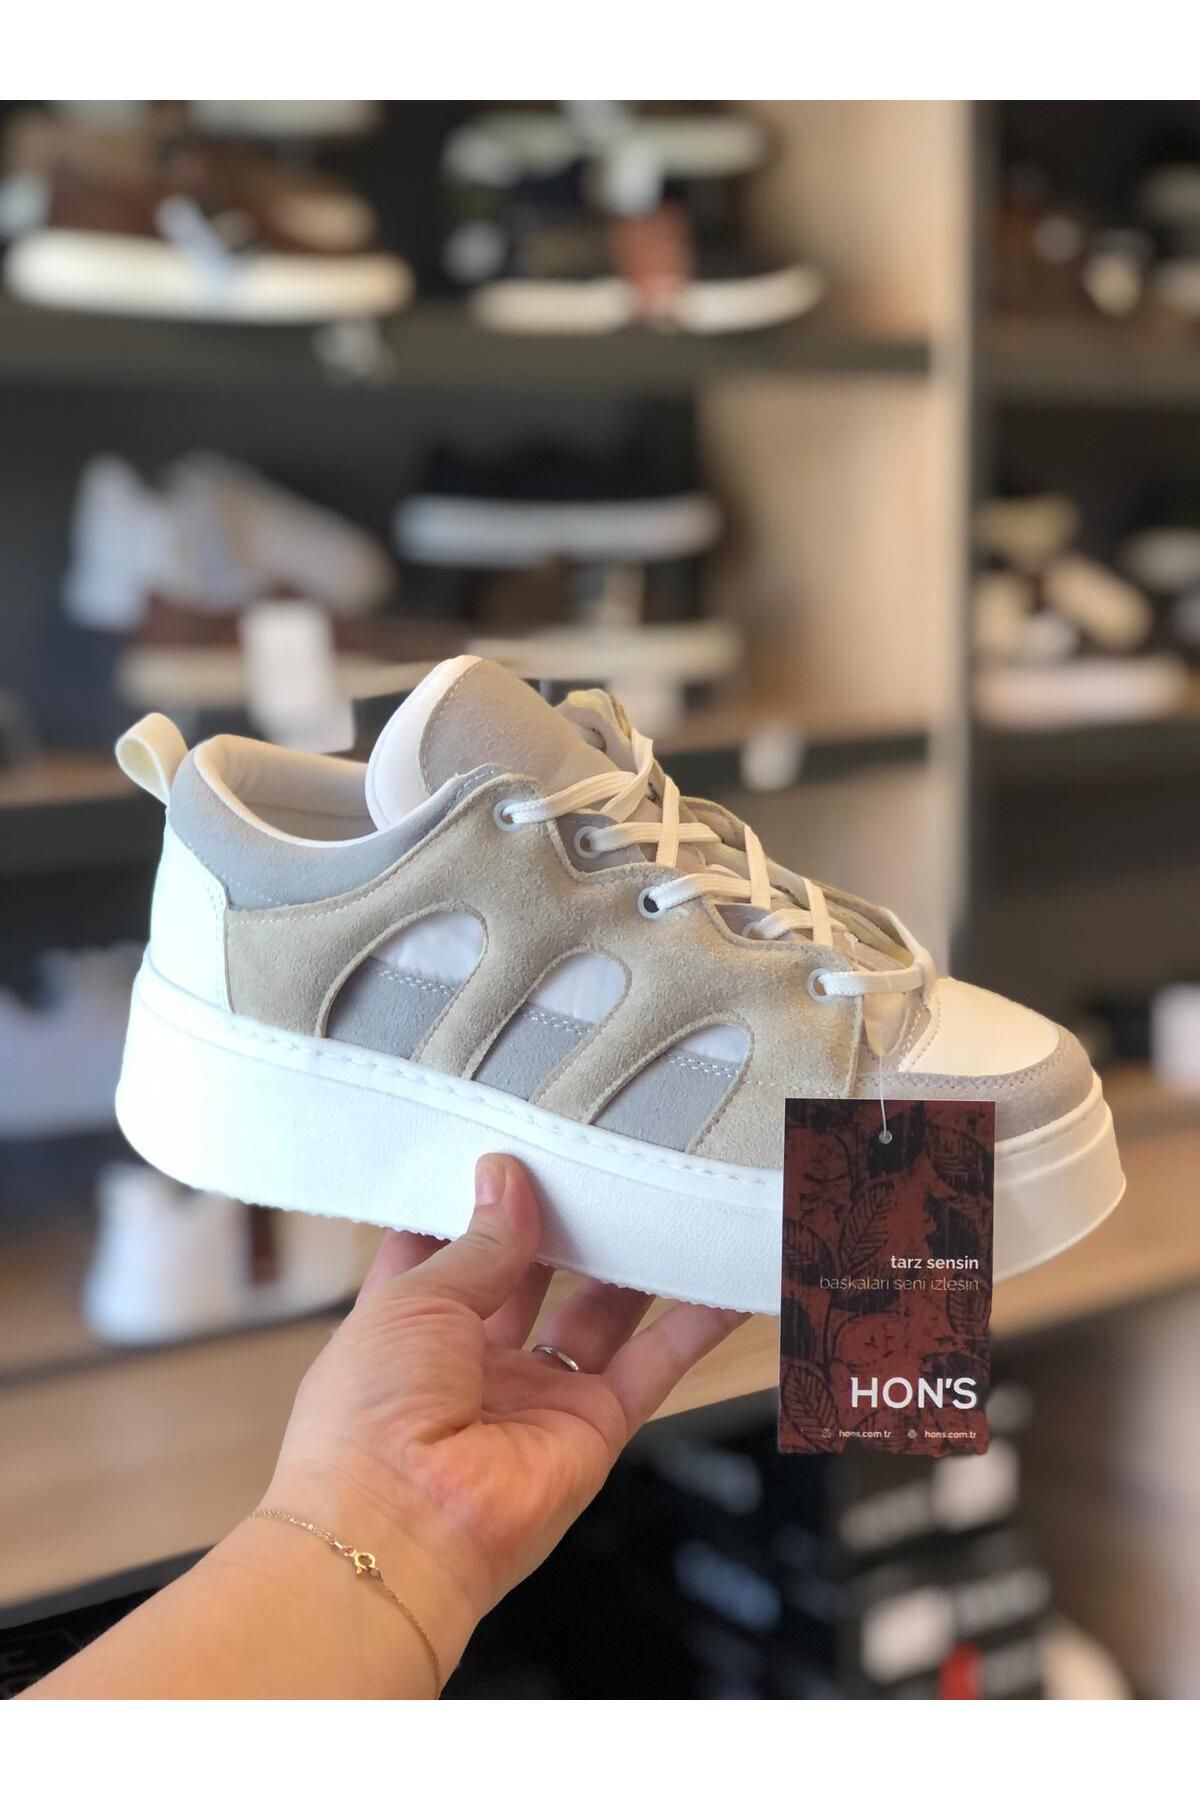 HON'S Premium Beyaz gri  spor ayakkabı sneakers